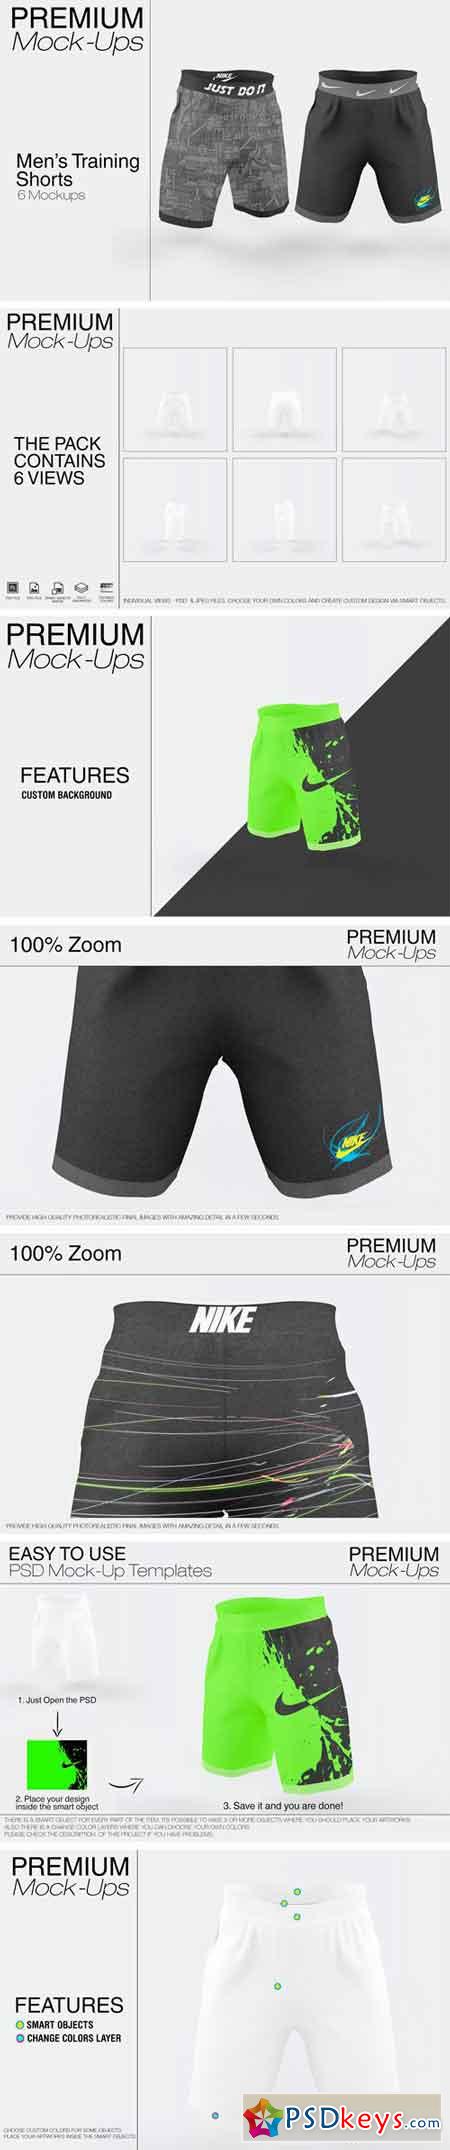 Download Men's Training Shorts Mockup 2381844 » Free Download Photoshop Vector Stock image Via Torrent ...